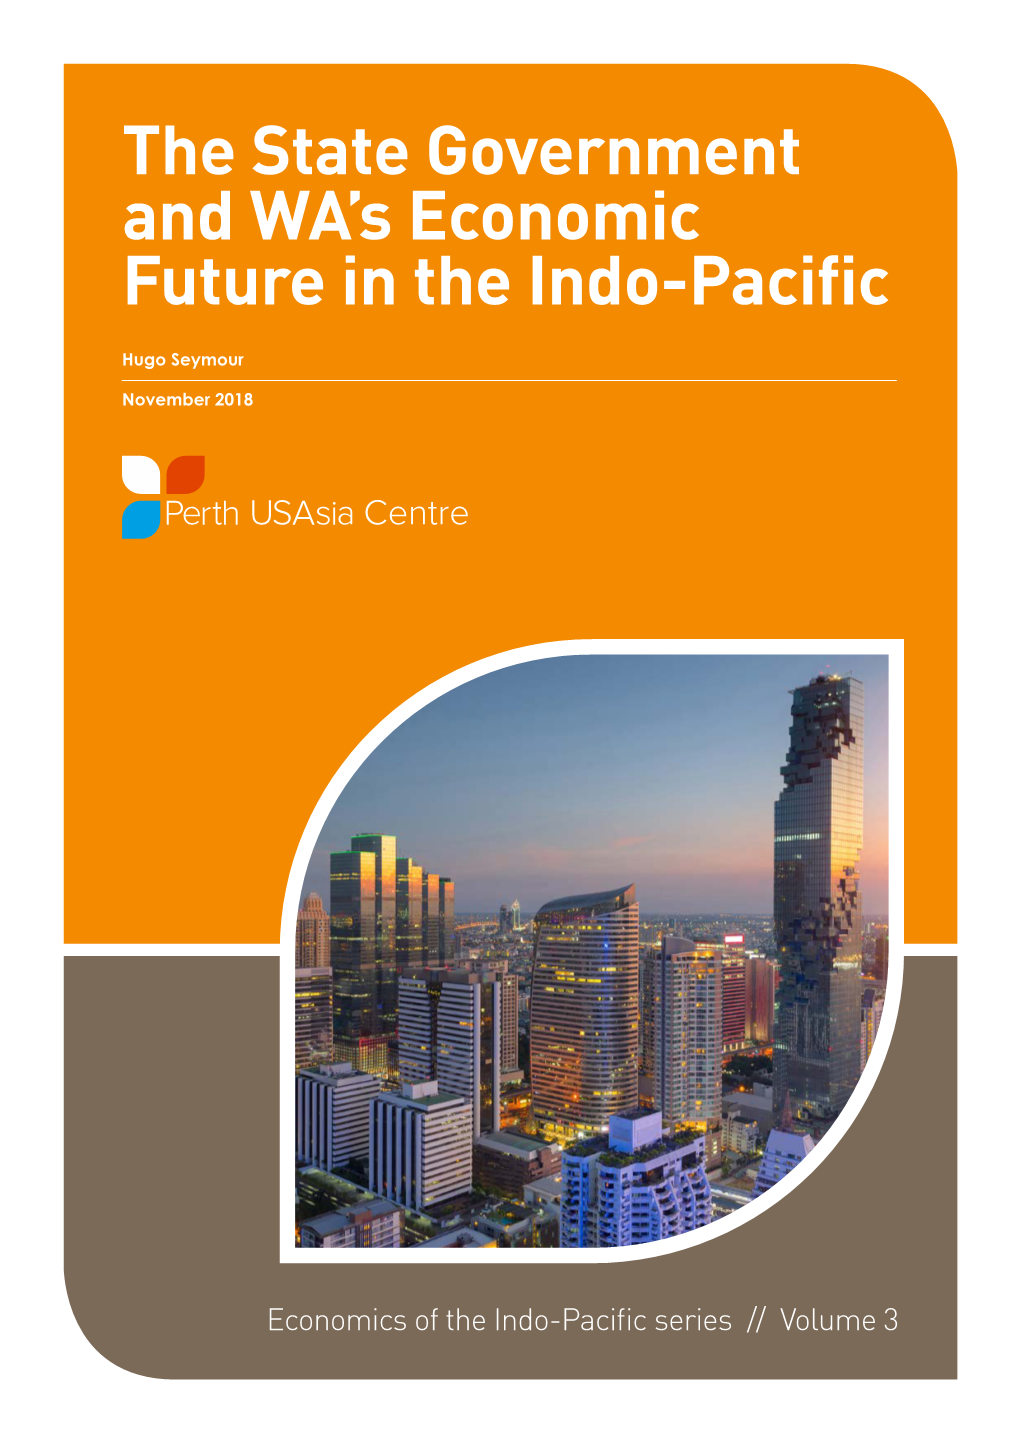 The State Government and WA's Economic Future in the Indo-Pacific